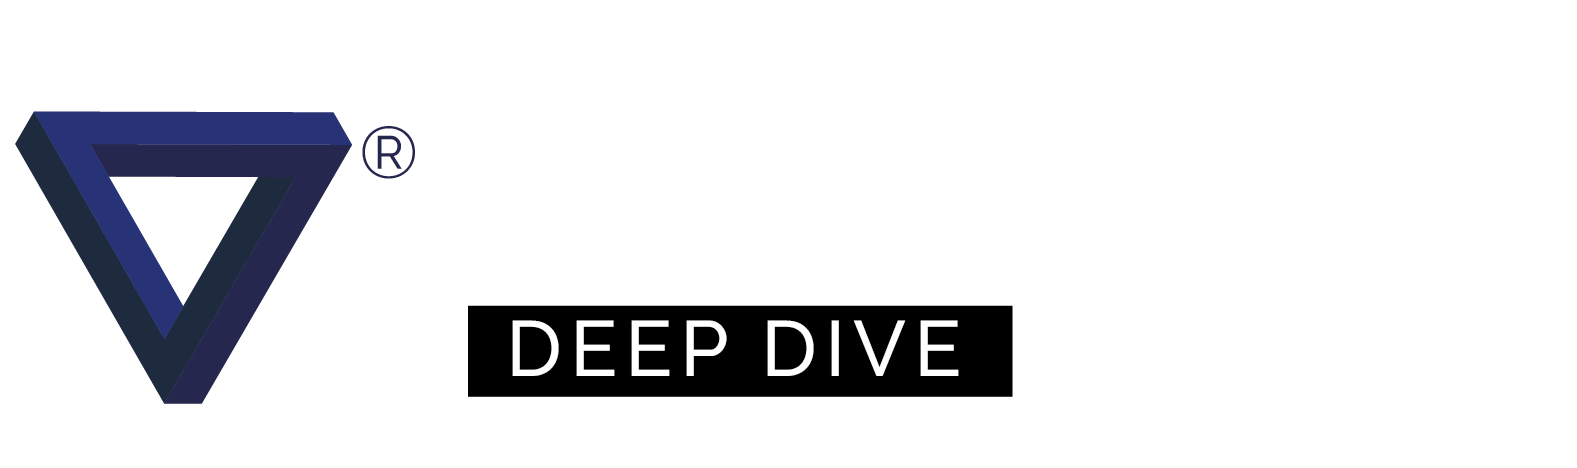 DeepDiveVoice